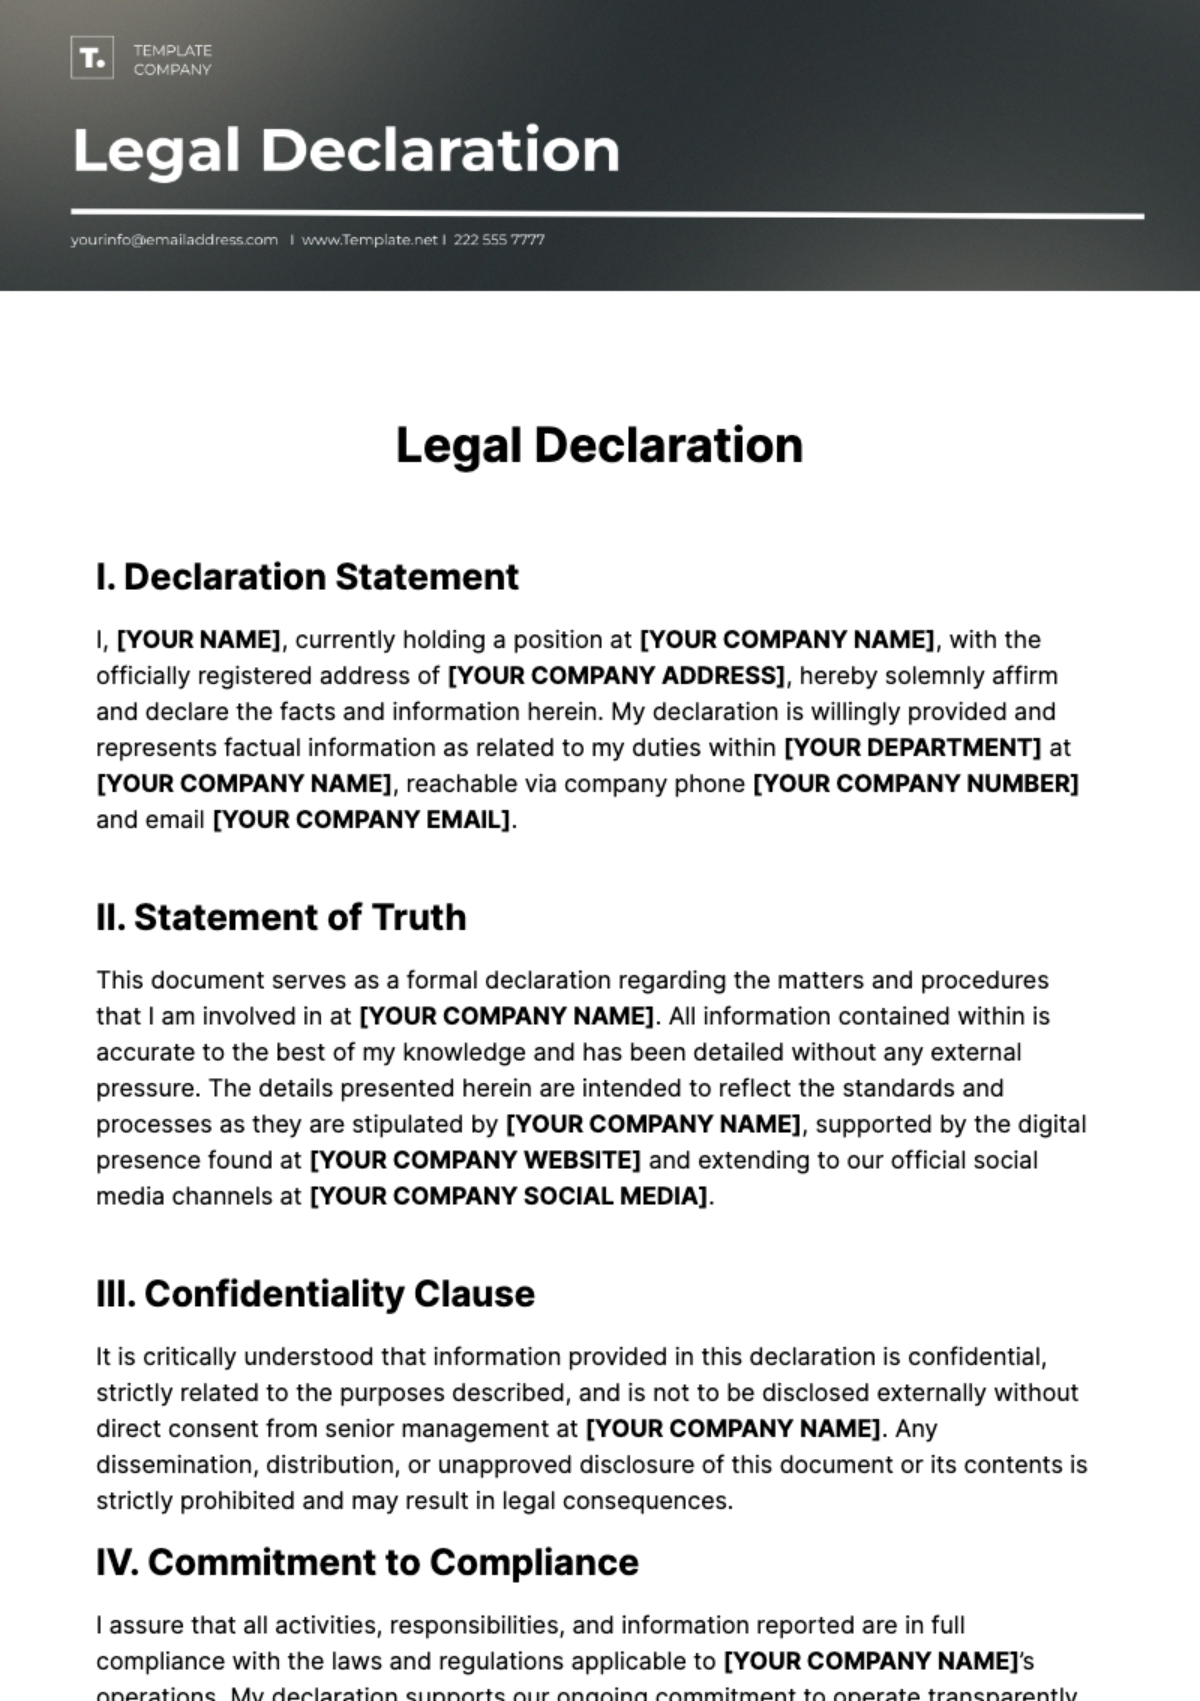 Legal Declaration Template